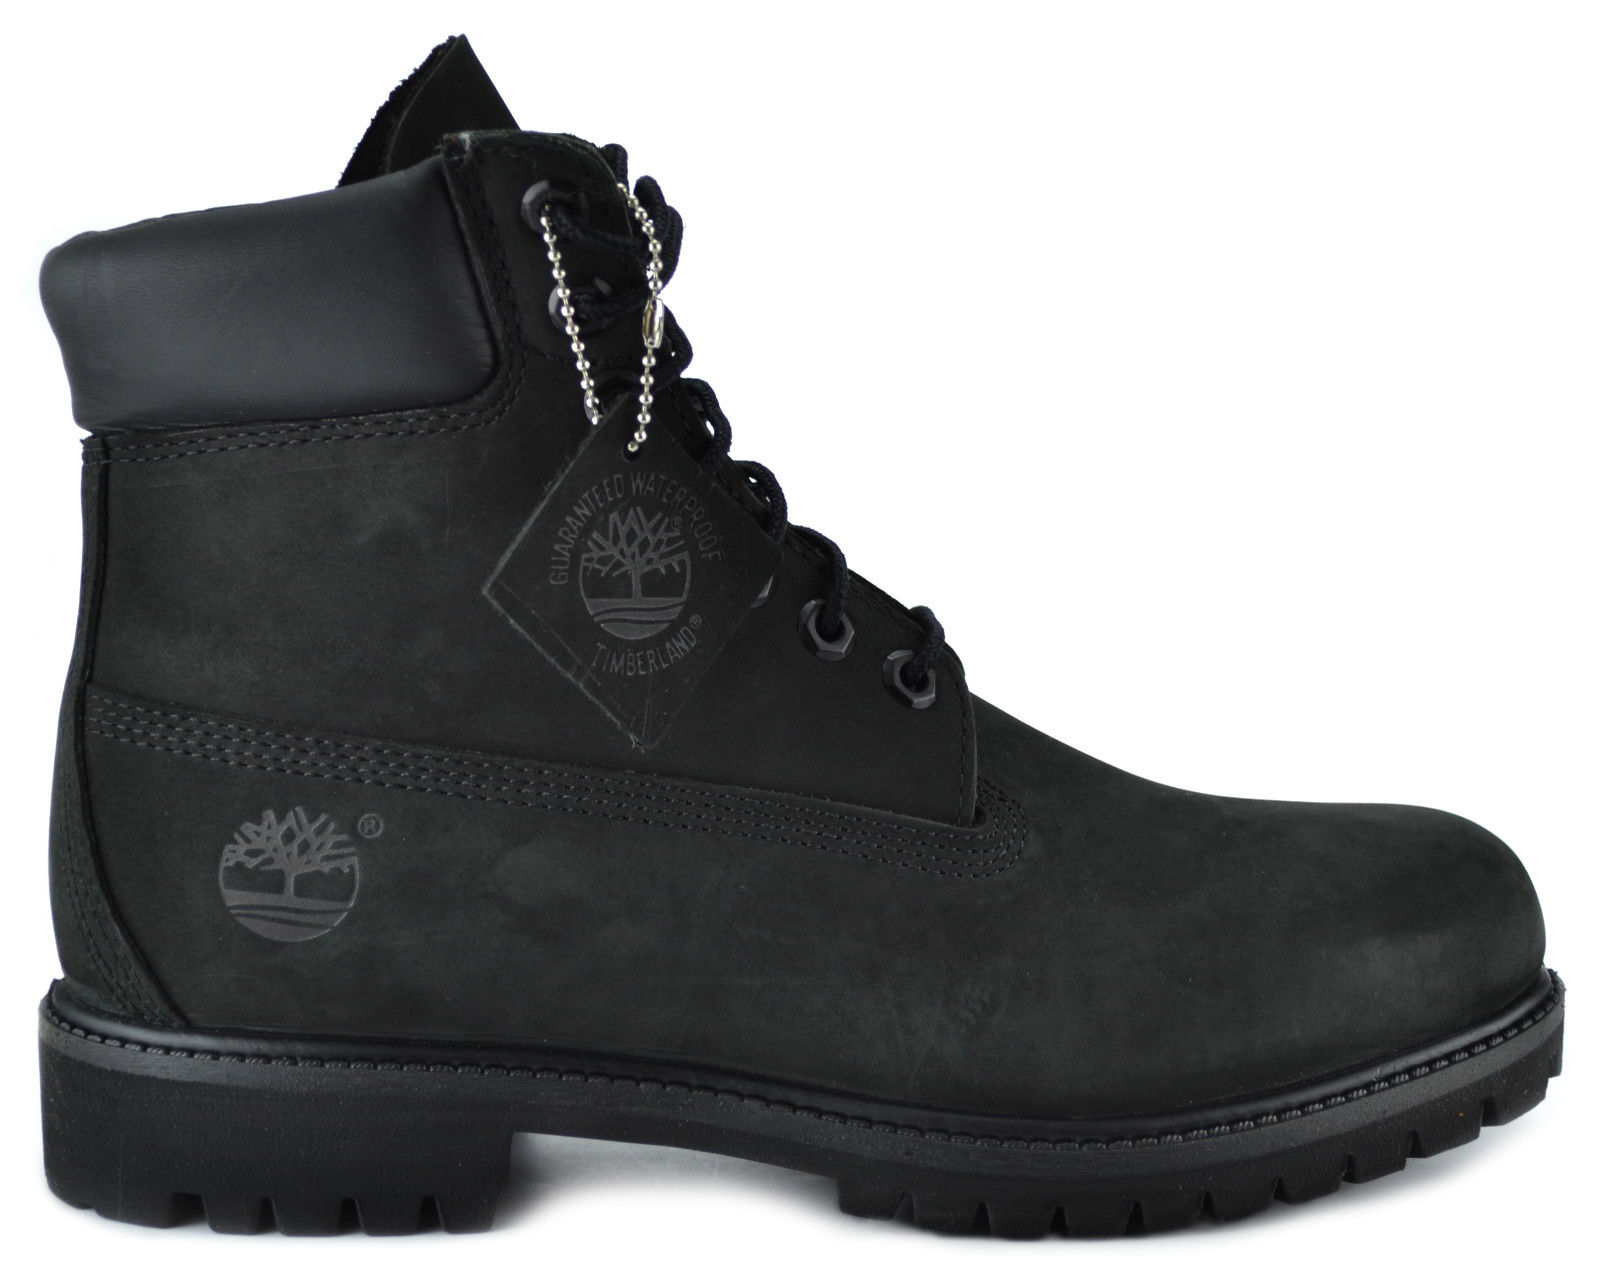 Basic Waterproof Boots Black 10073w 